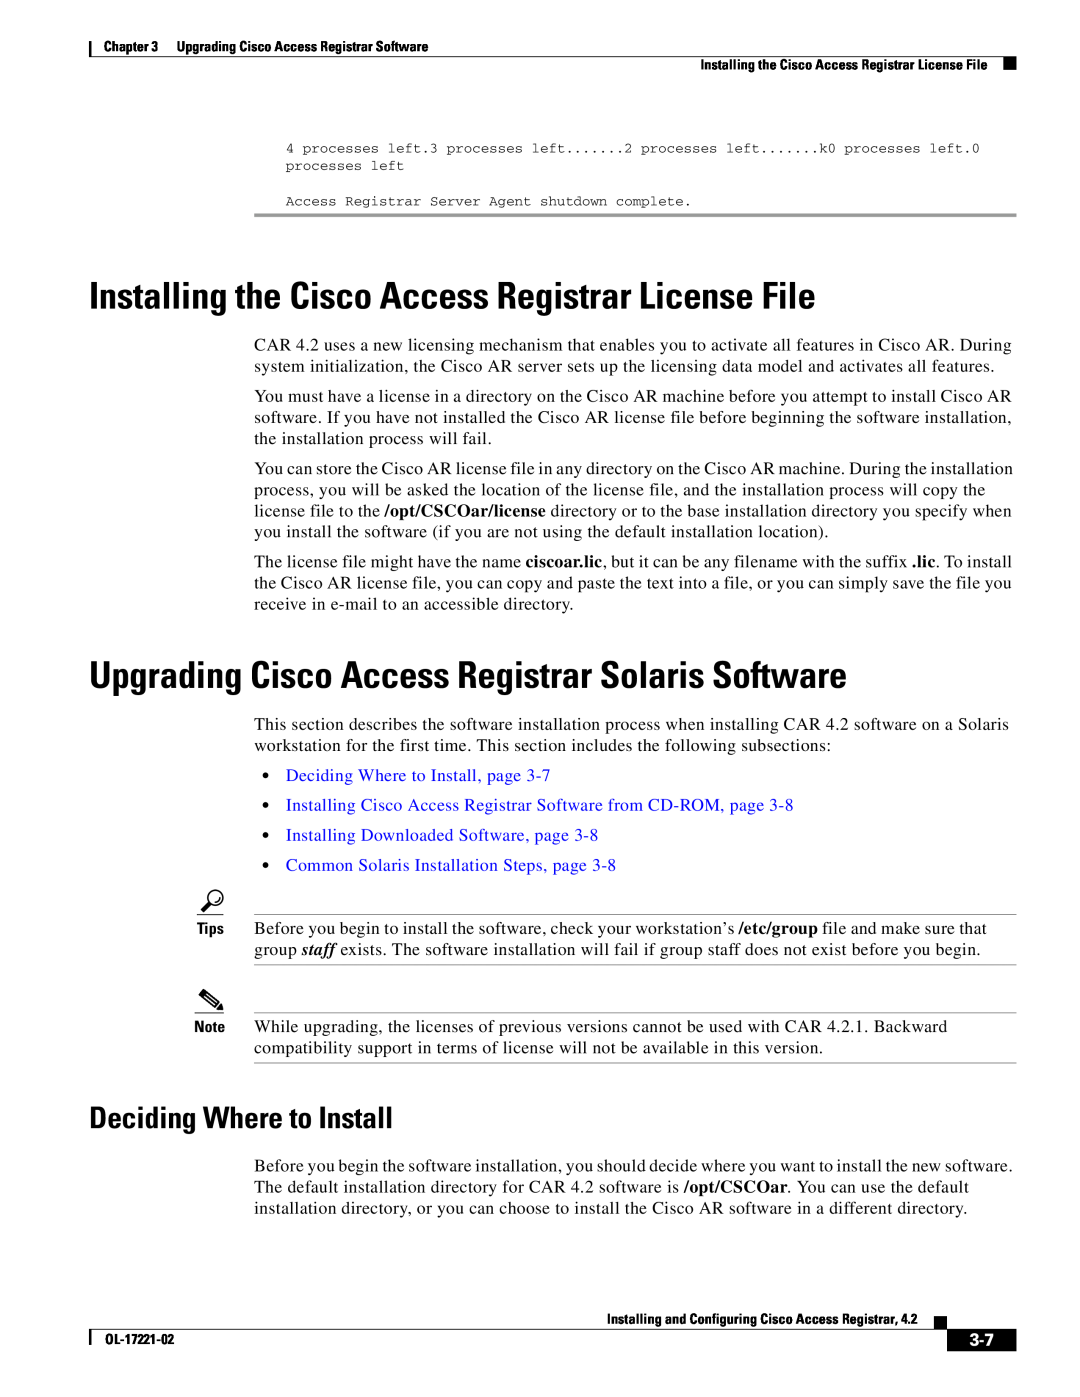 Cisco Systems 4.2 Installing the Cisco Access Registrar License File, Upgrading Cisco Access Registrar Solaris Software 